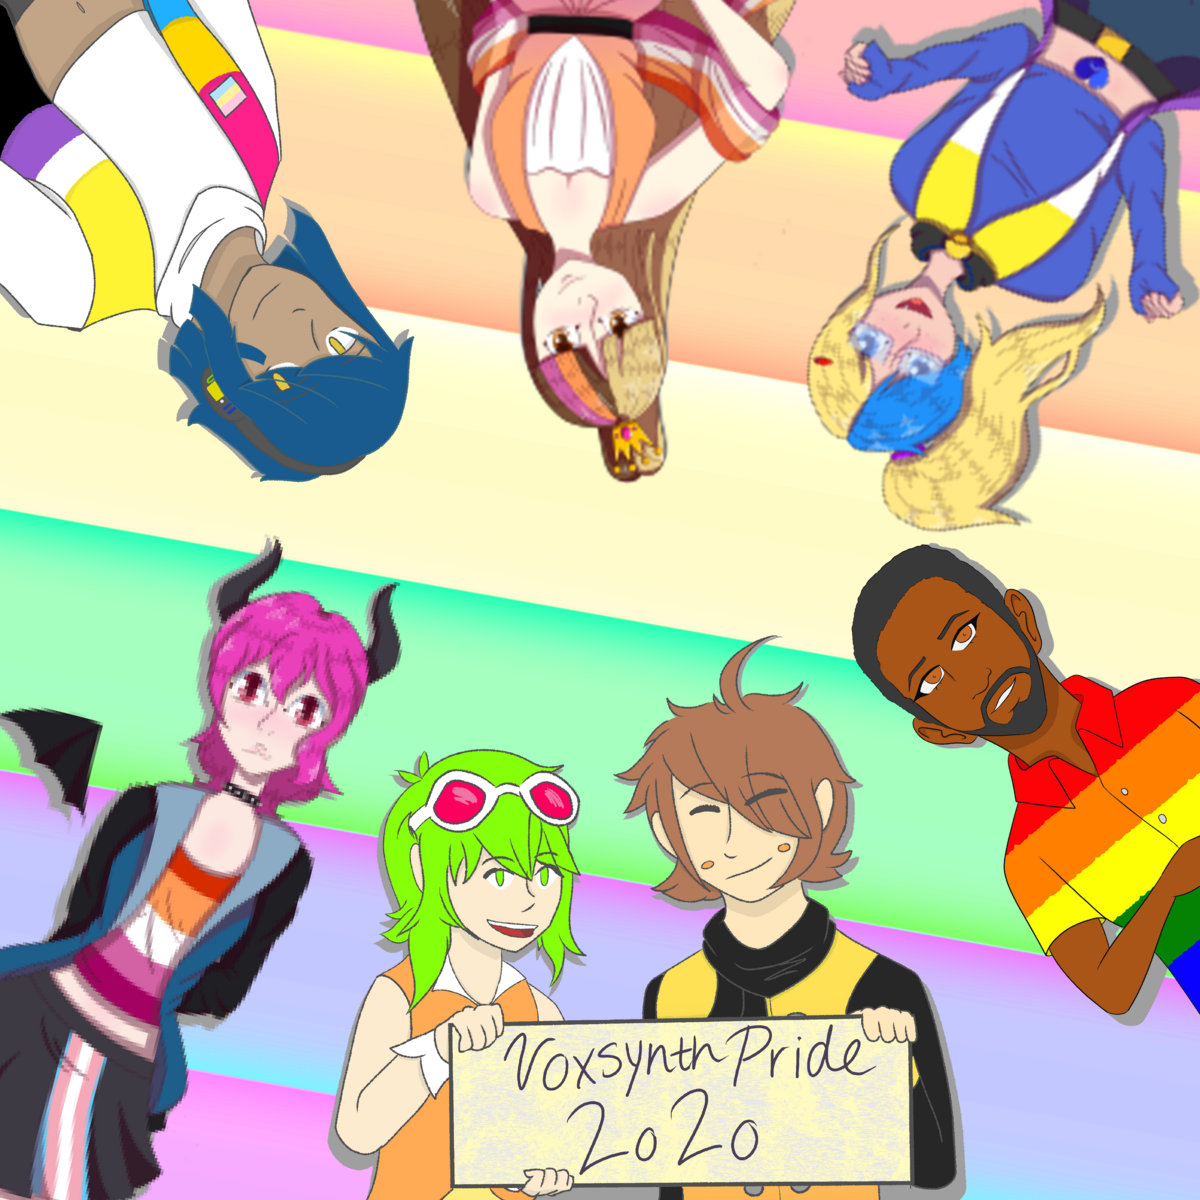 Voxsynth Pride 2020 | Vocaloid Wiki | Fandom